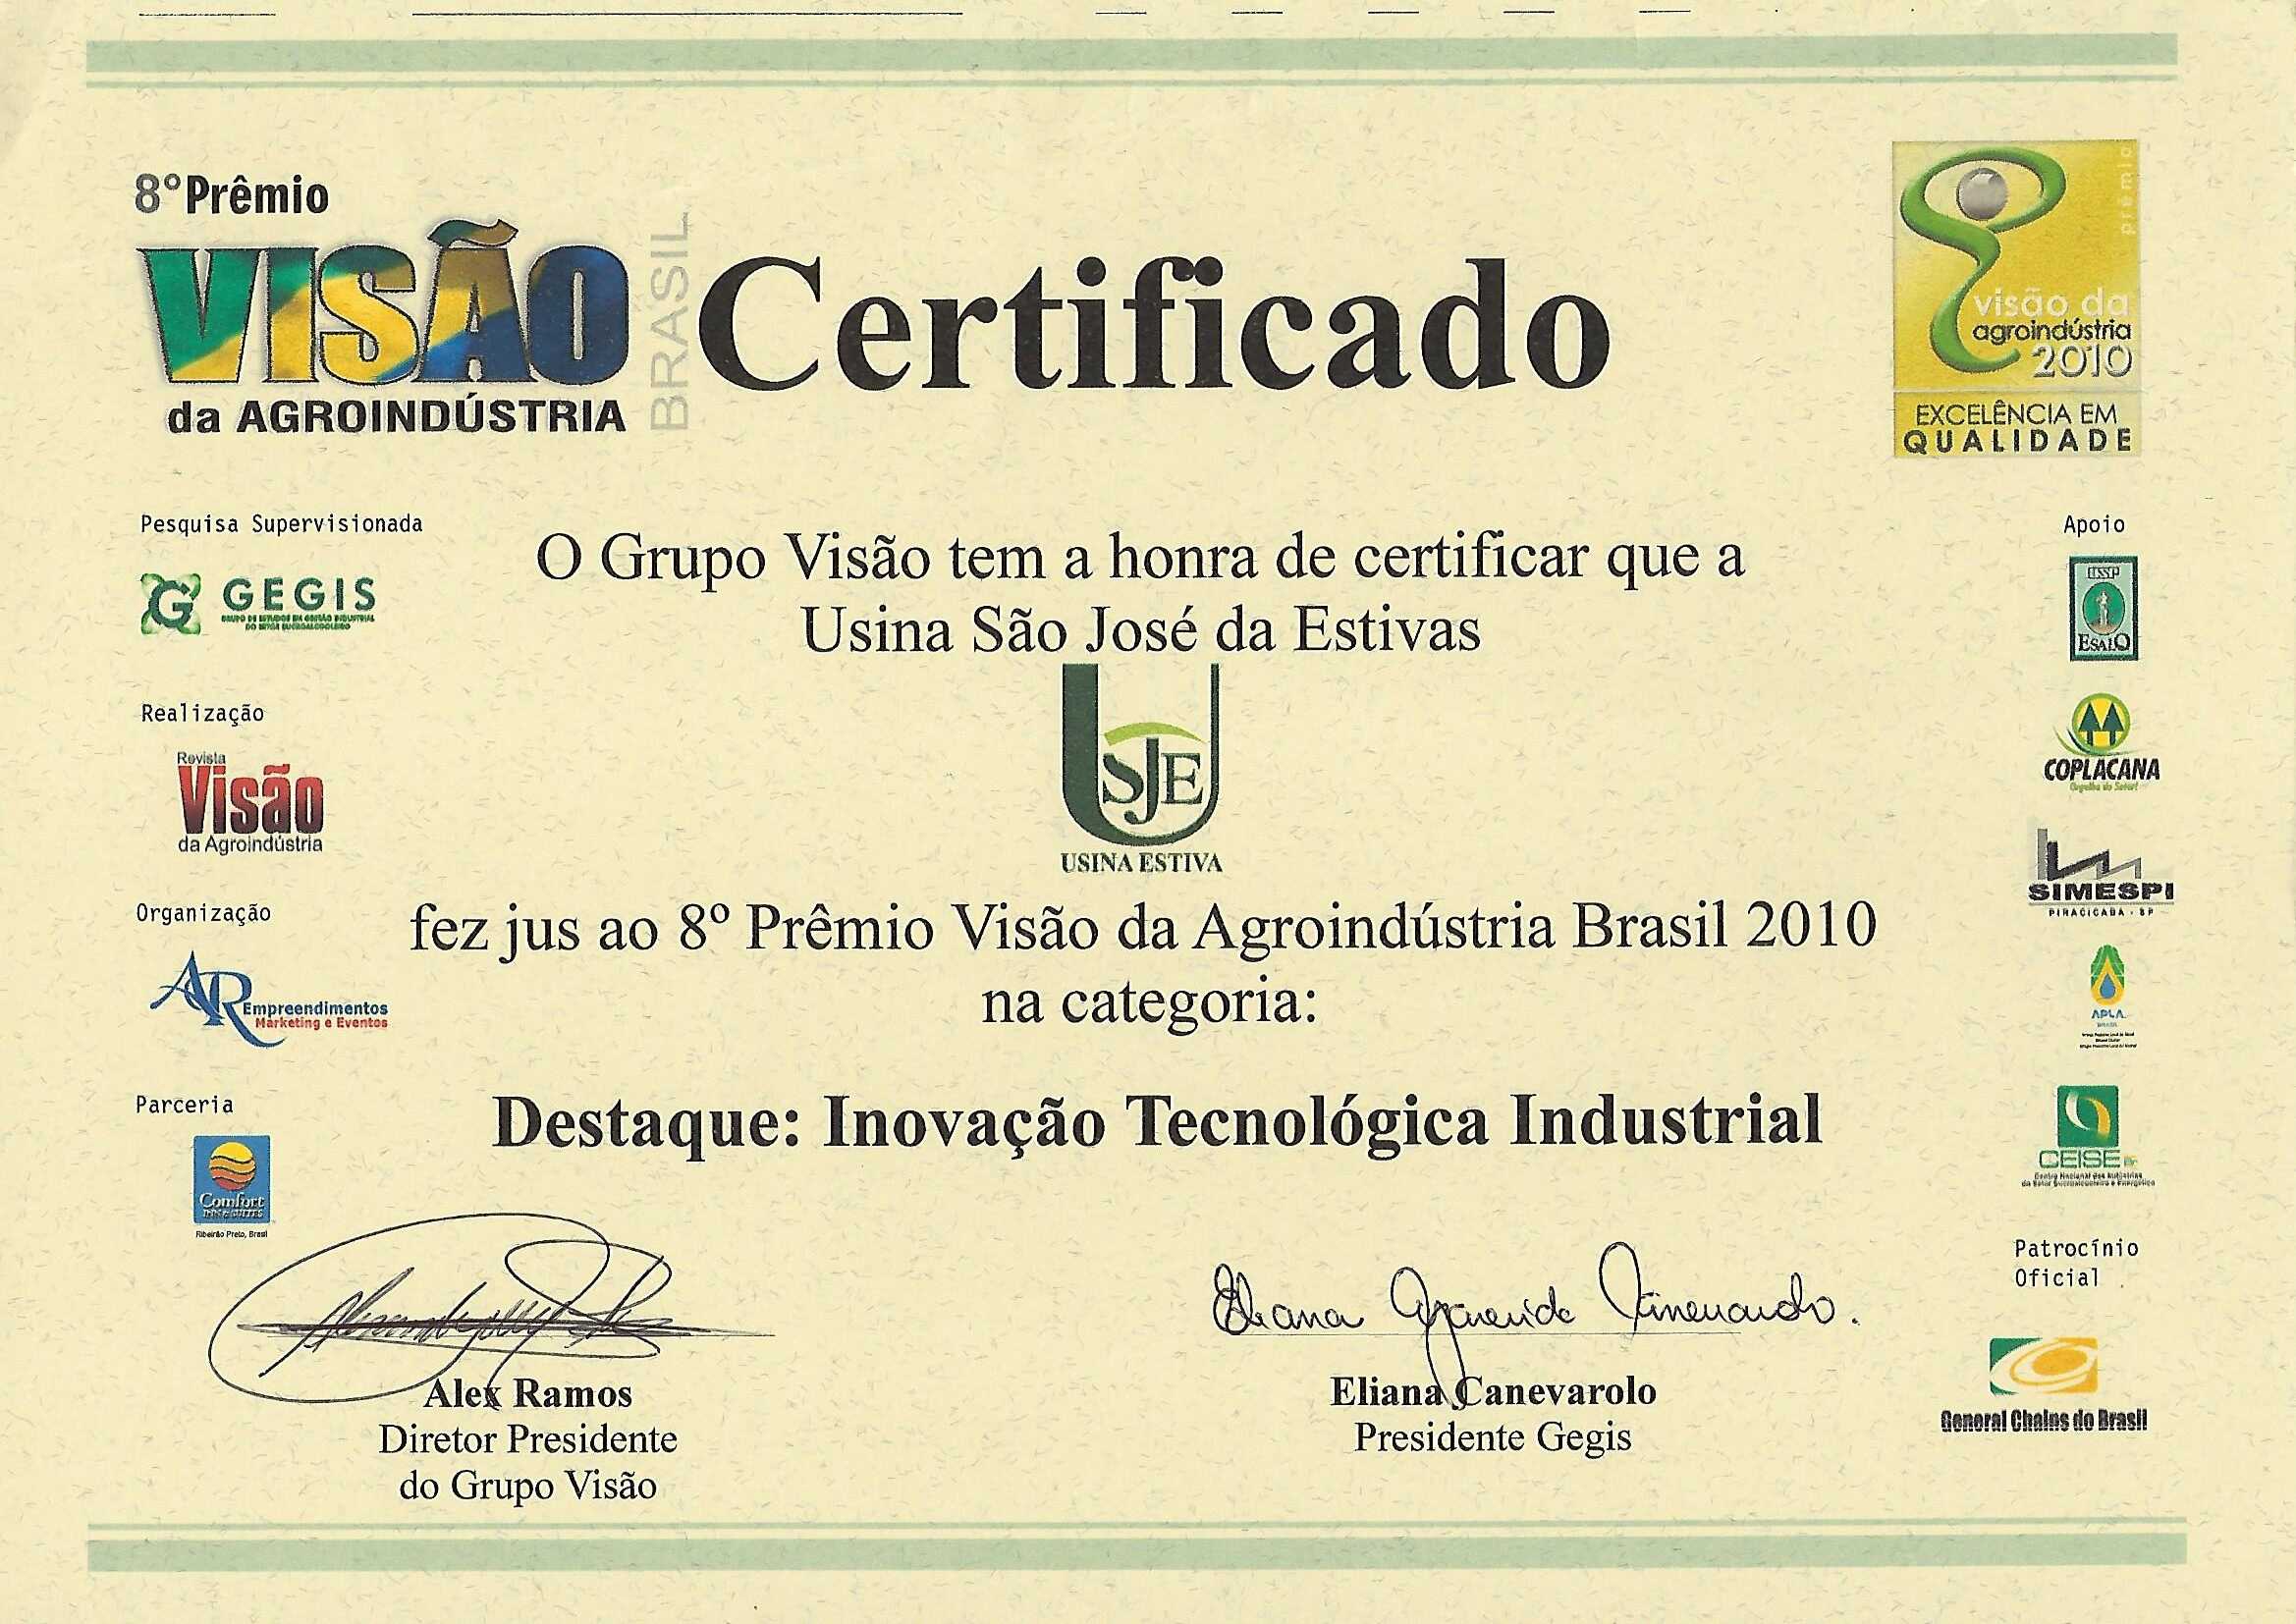 VisaodaAgroindustria-Inovacao TecnologicaIndustrial-2010.jpg (2.02 MB)